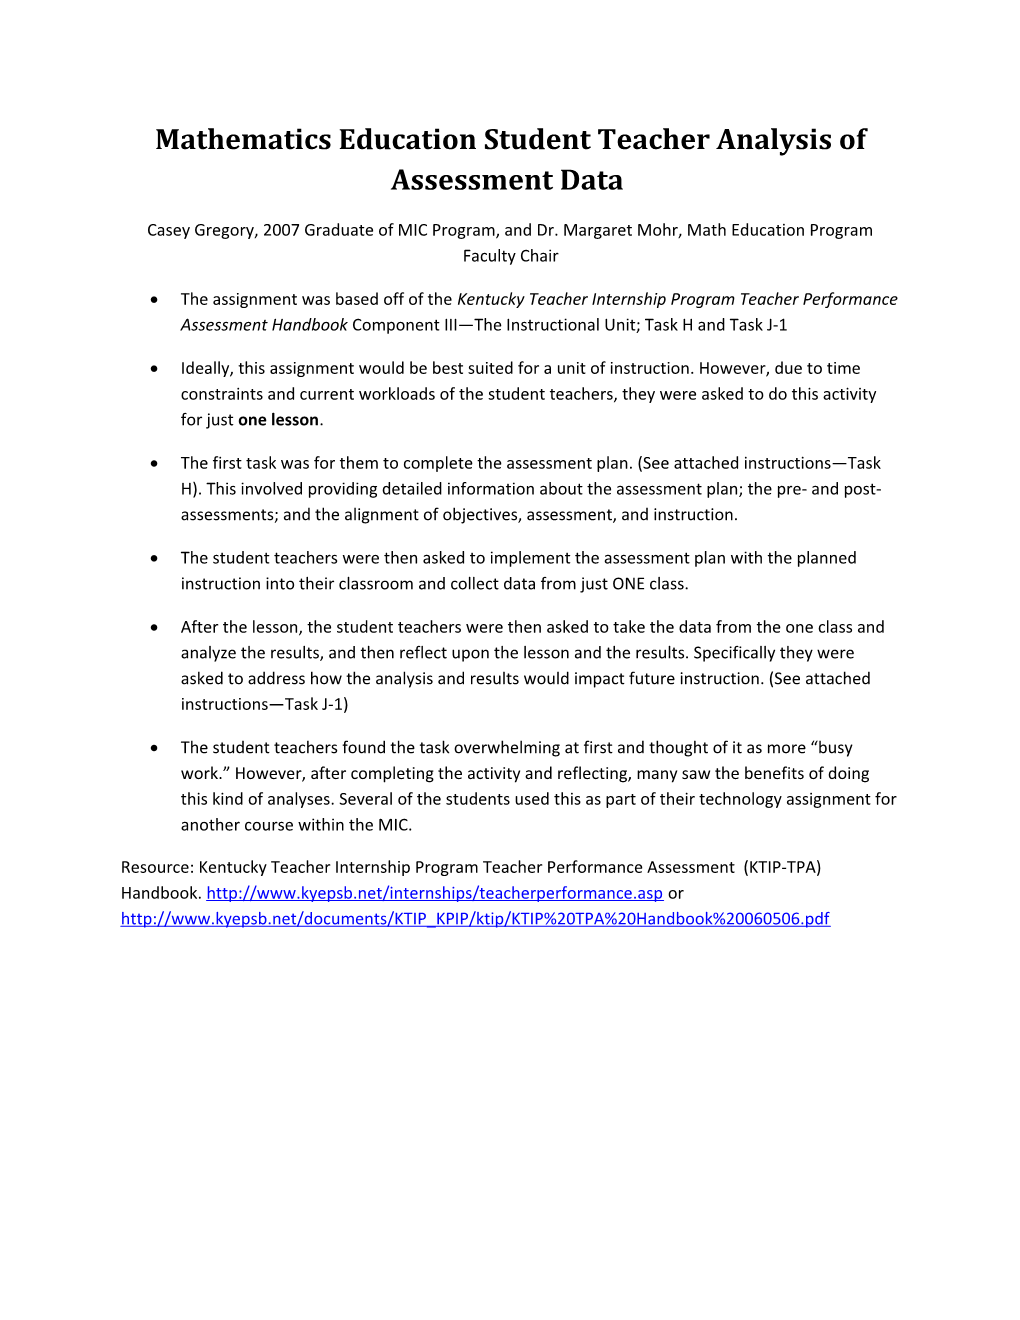 Mathematics Education Student Teacher Analysis of Assessment Data